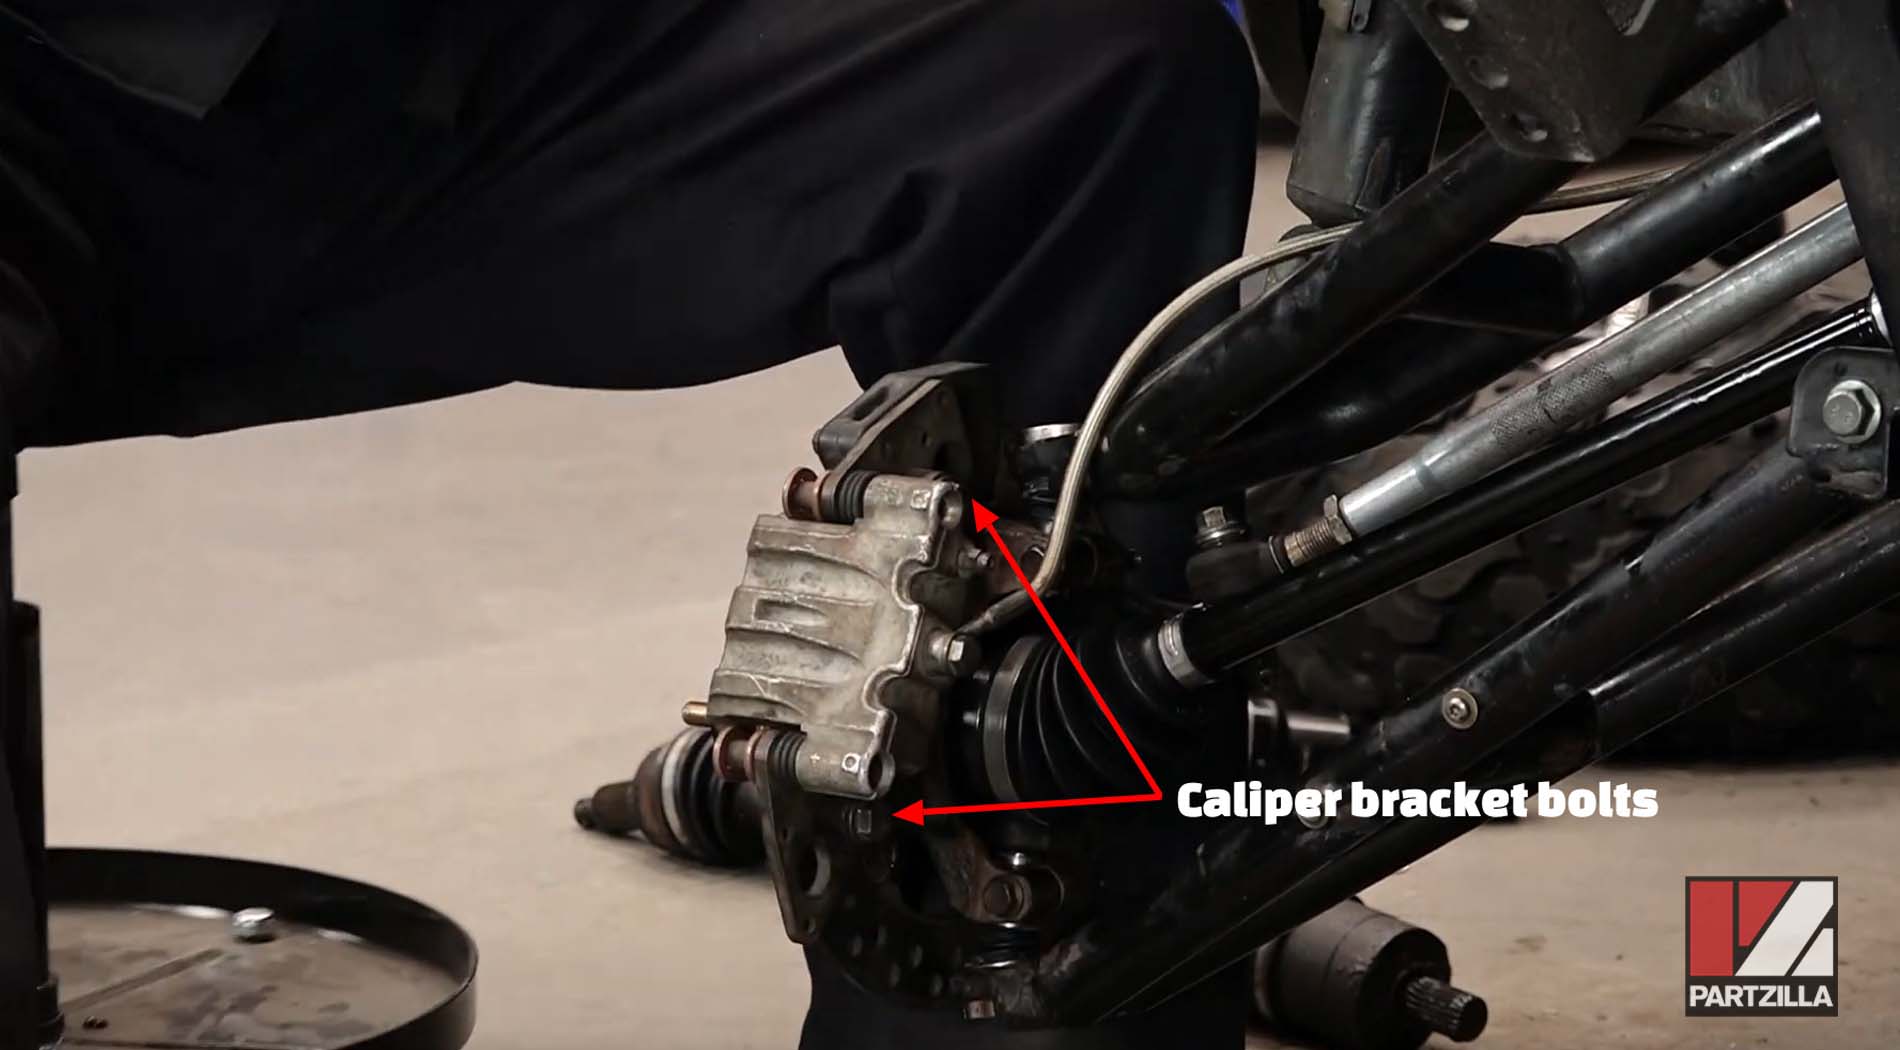 Polaris Ranger Crew 800 caliper bracket bolts